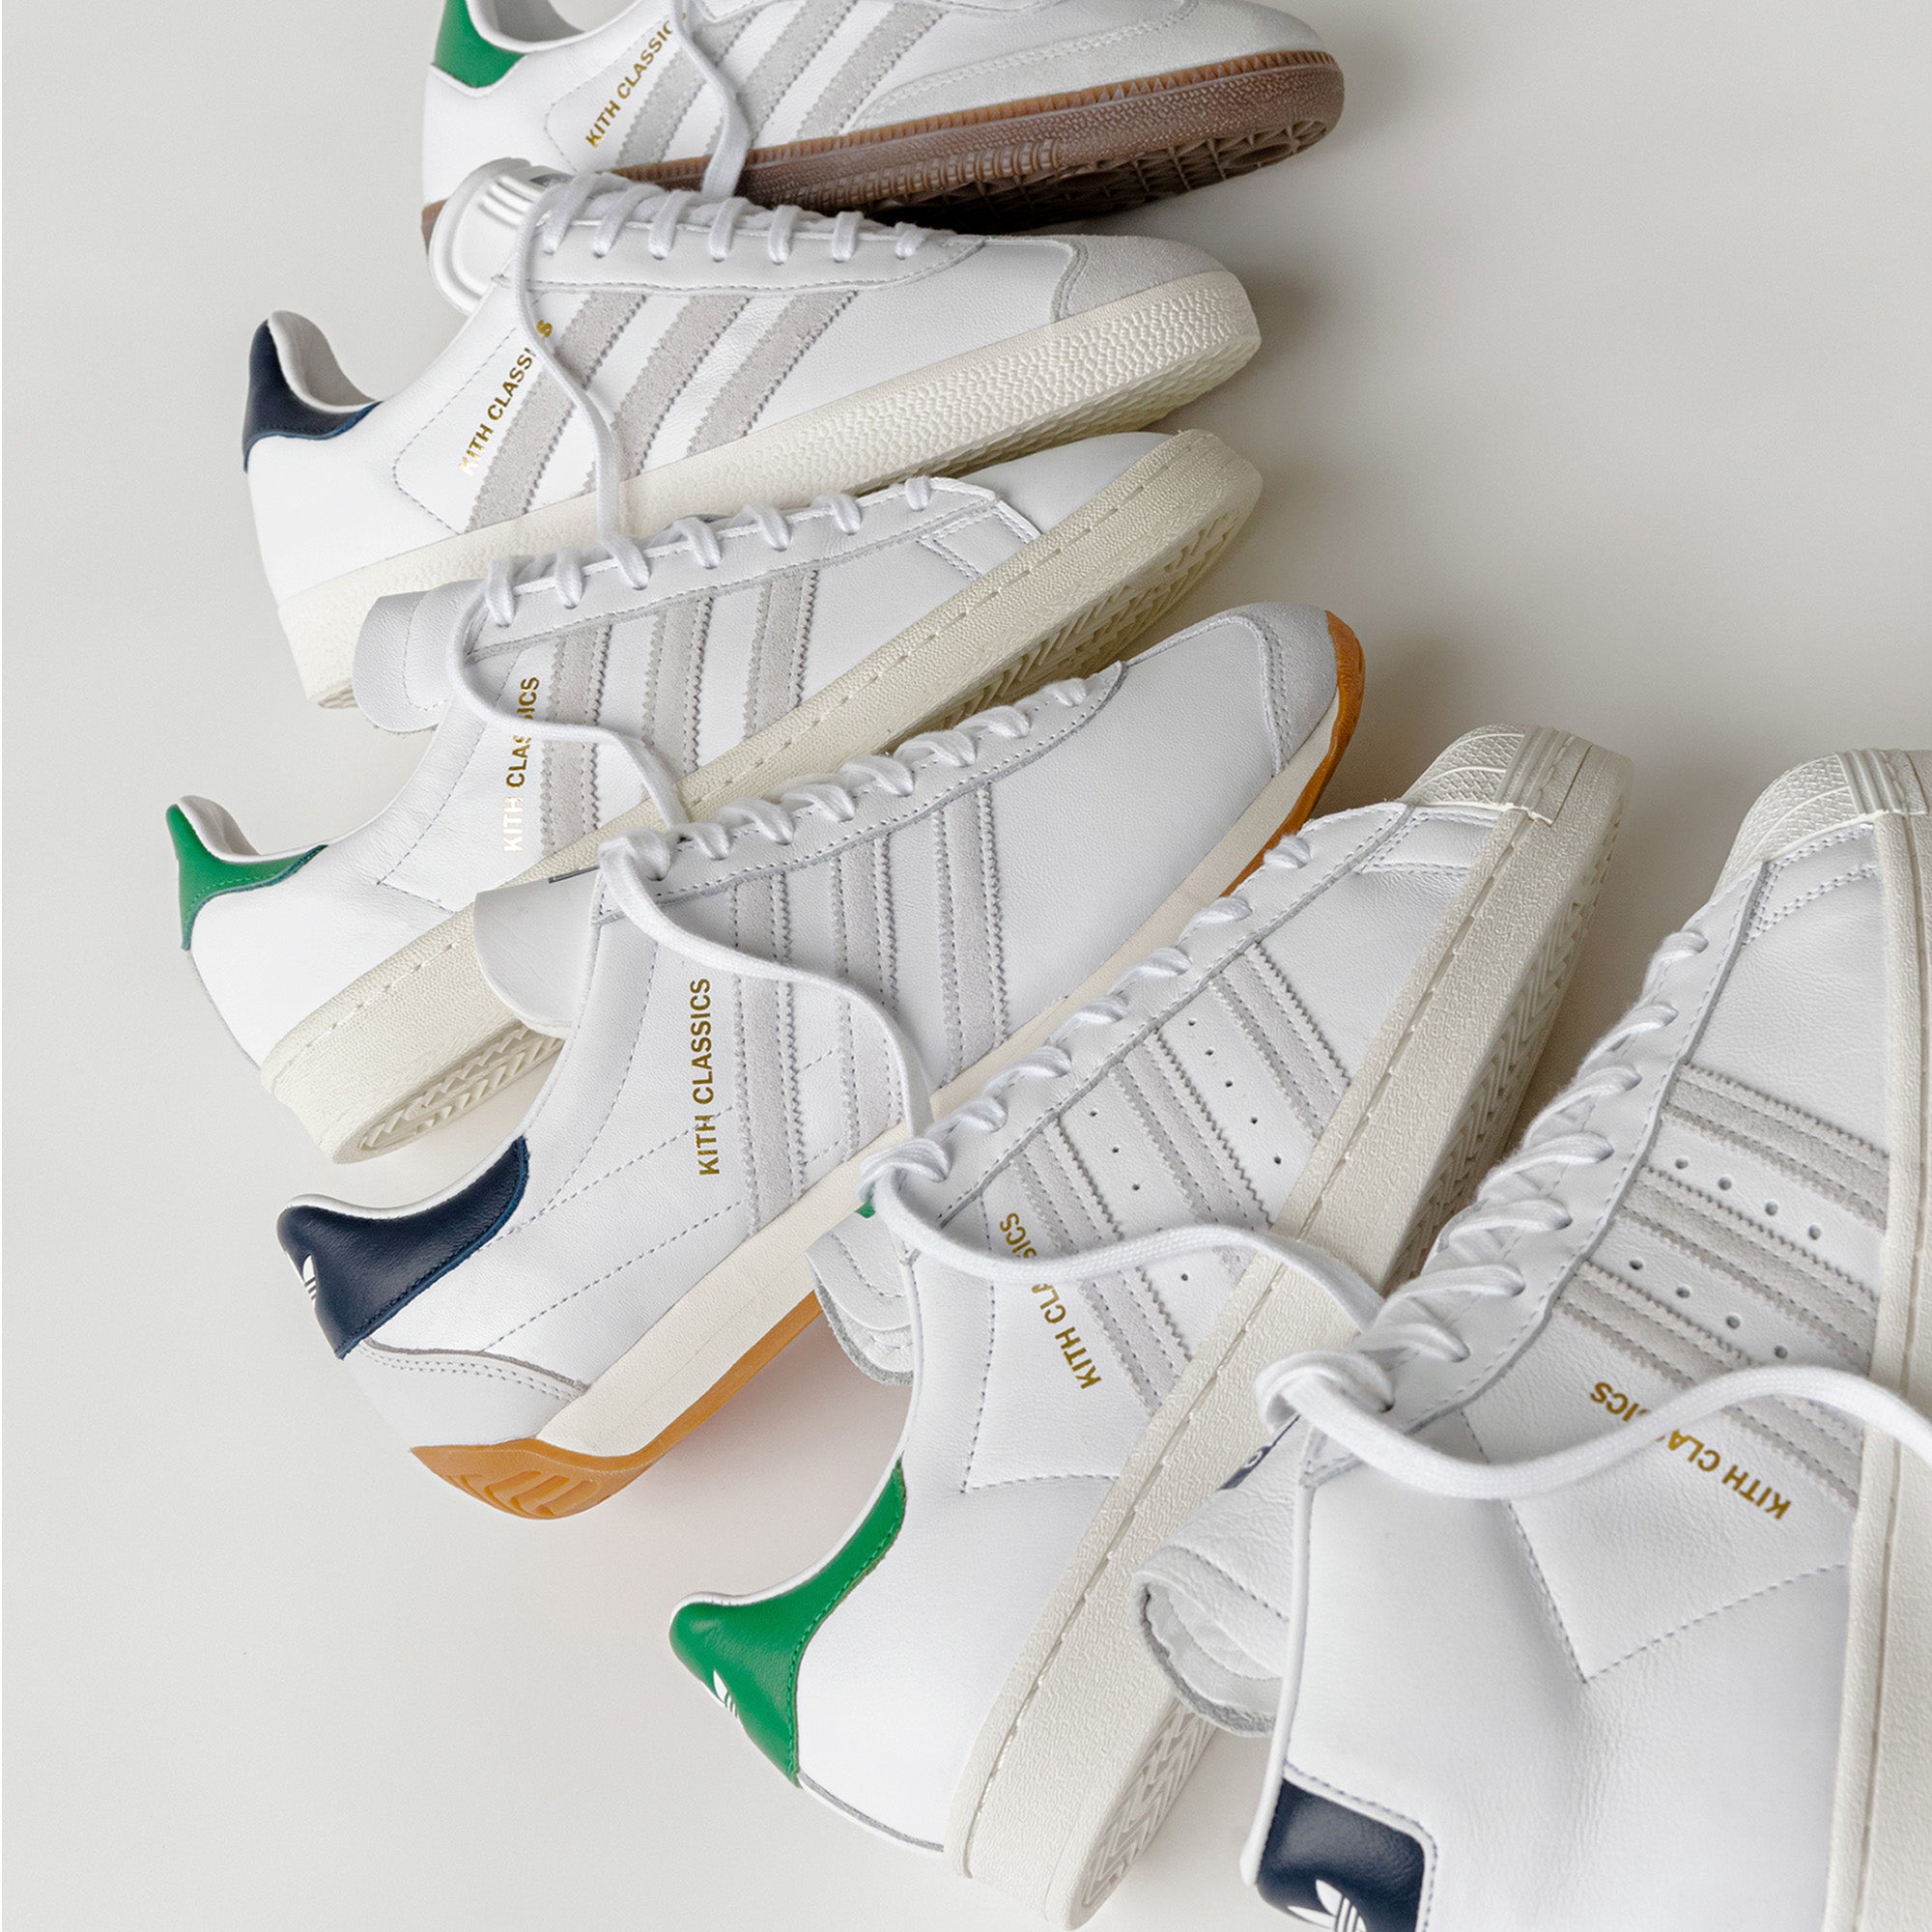 Adidas Classics: Shoes & Apparel Kith Classics Program